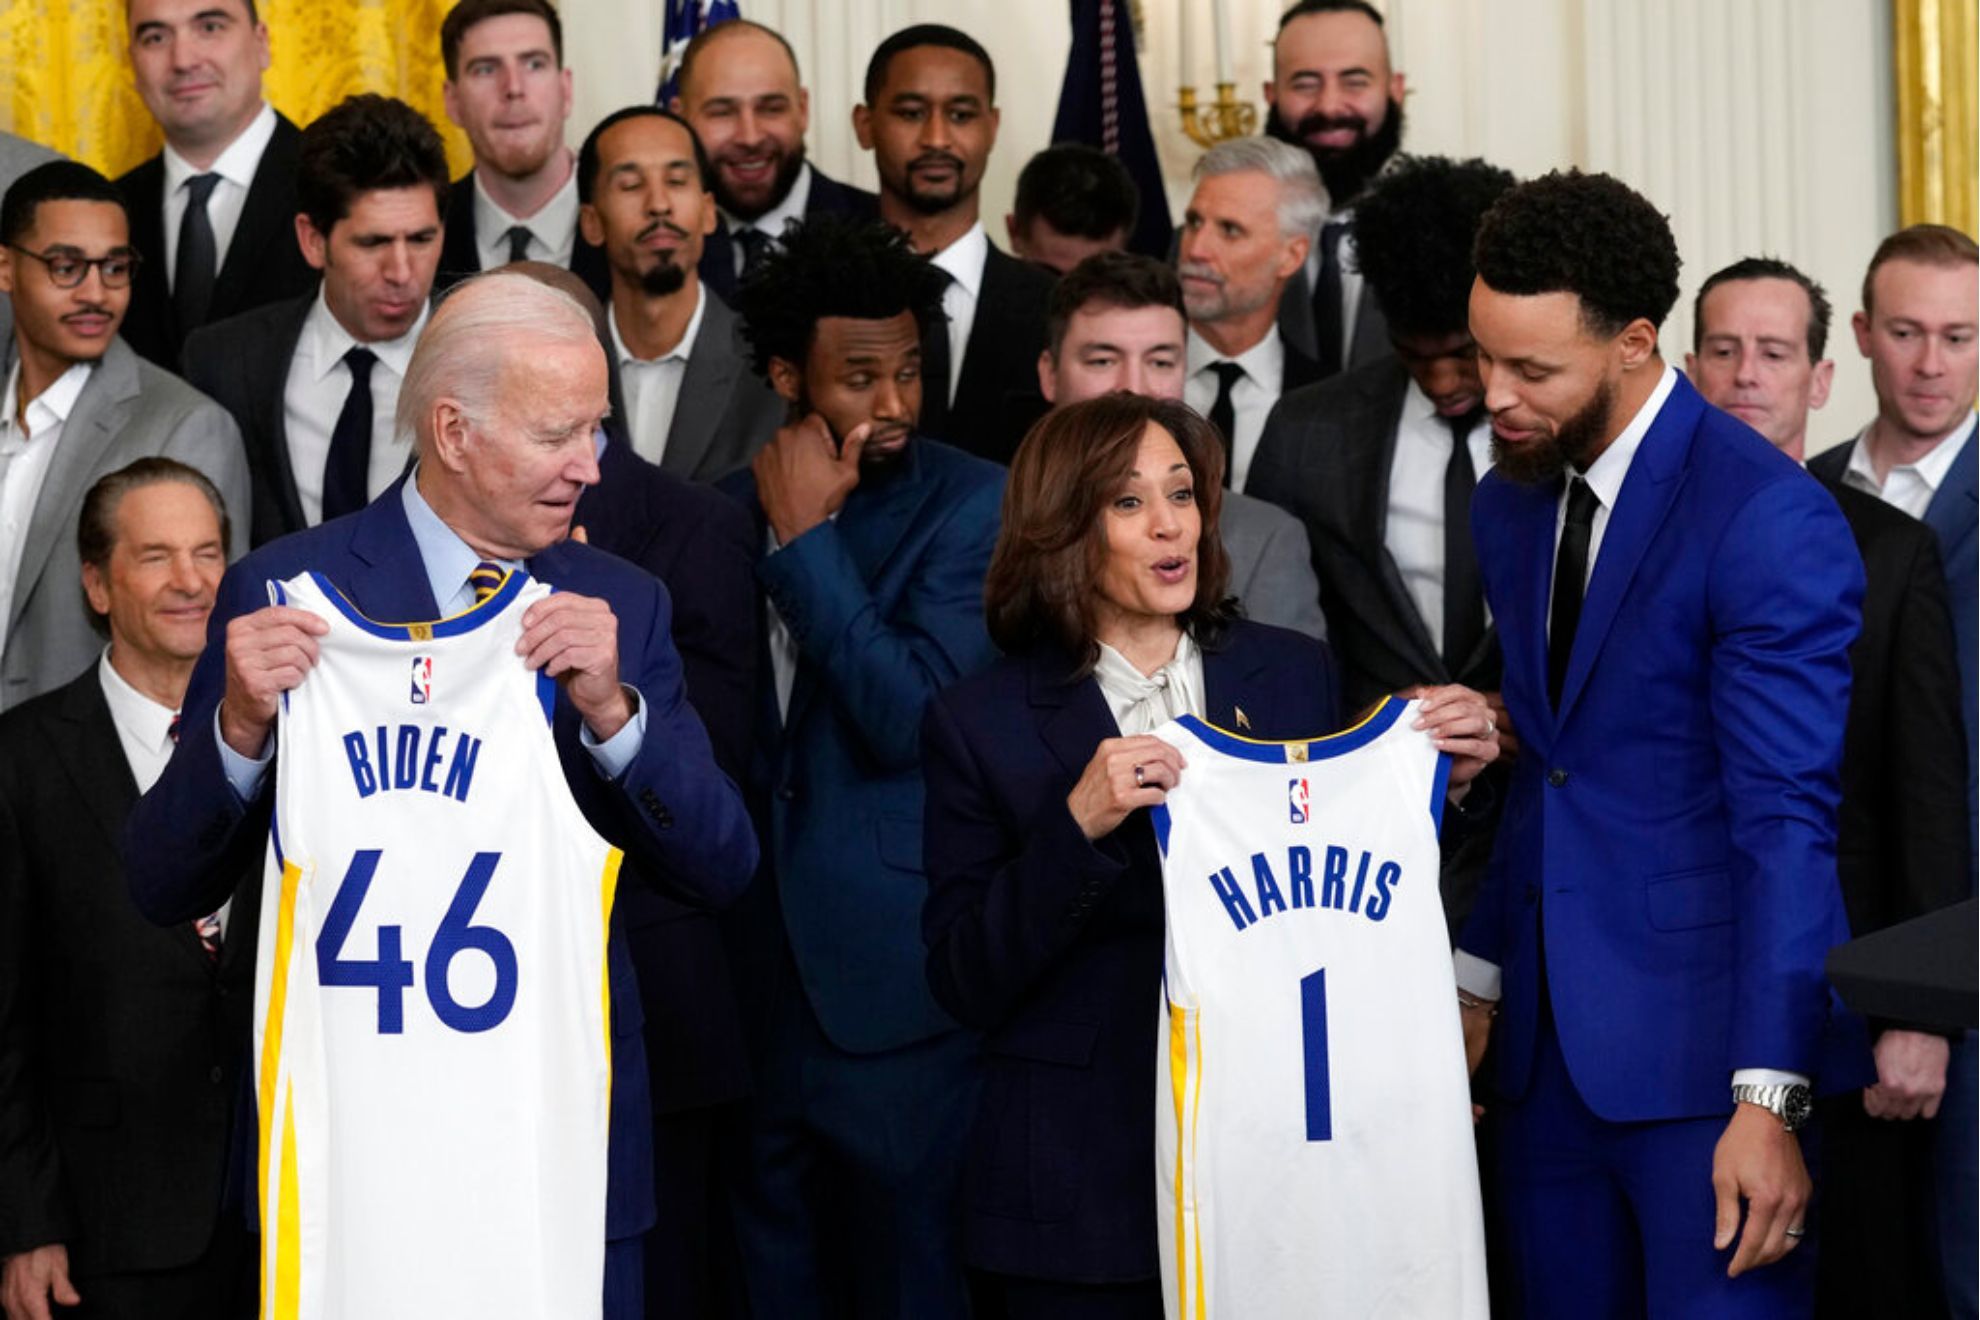 President Joe Biden and Vice President Kamala Harris receive personalized jerseys from the Warriors franchise.